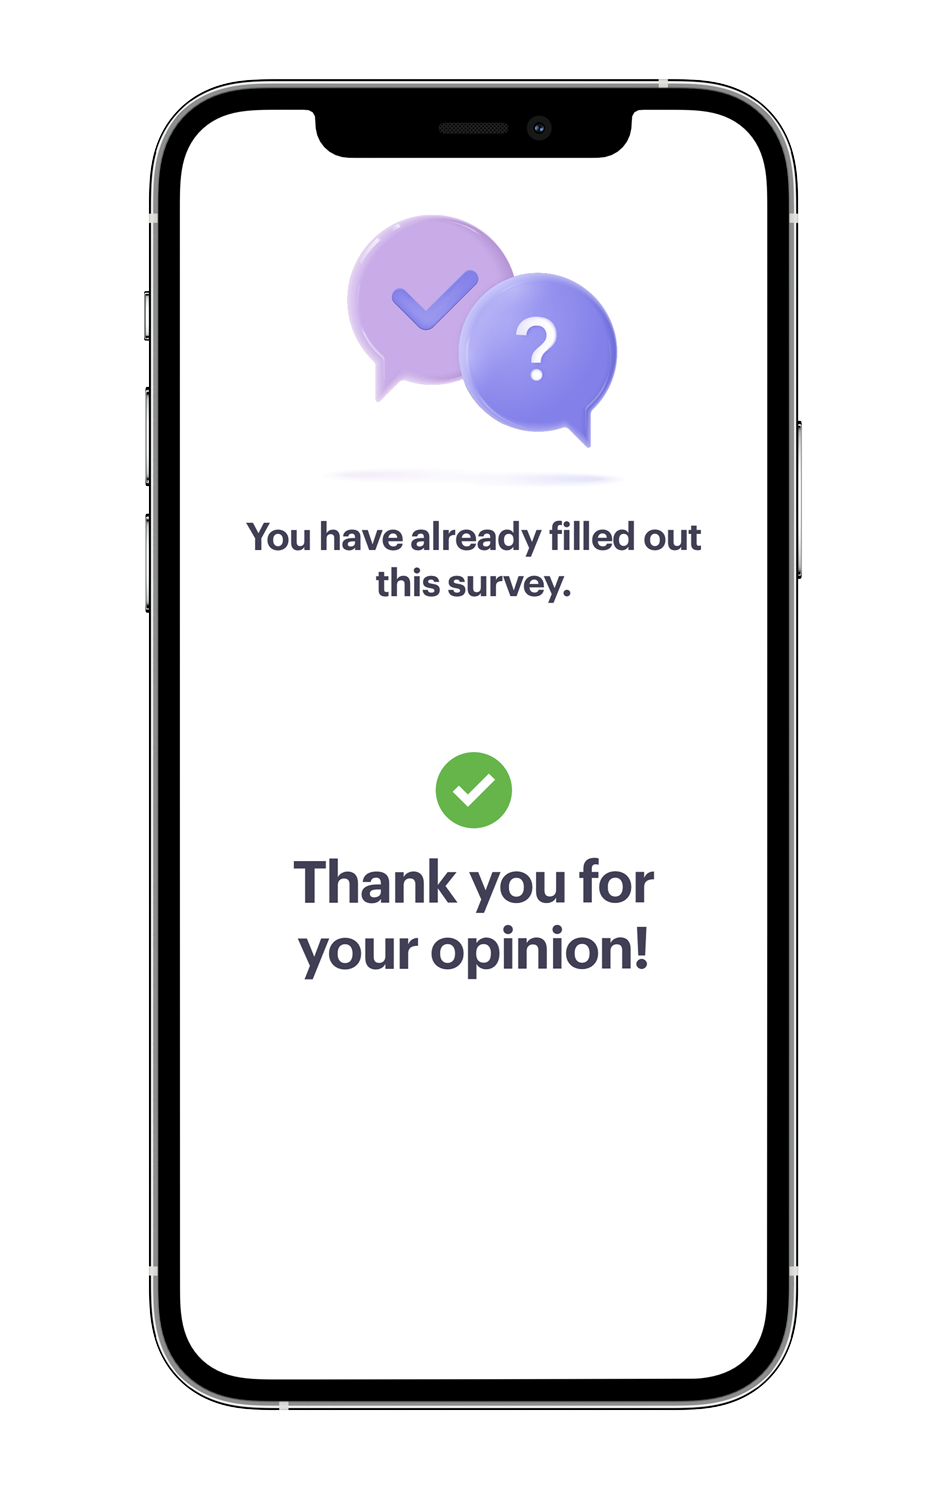 NPS survey - survey filled out